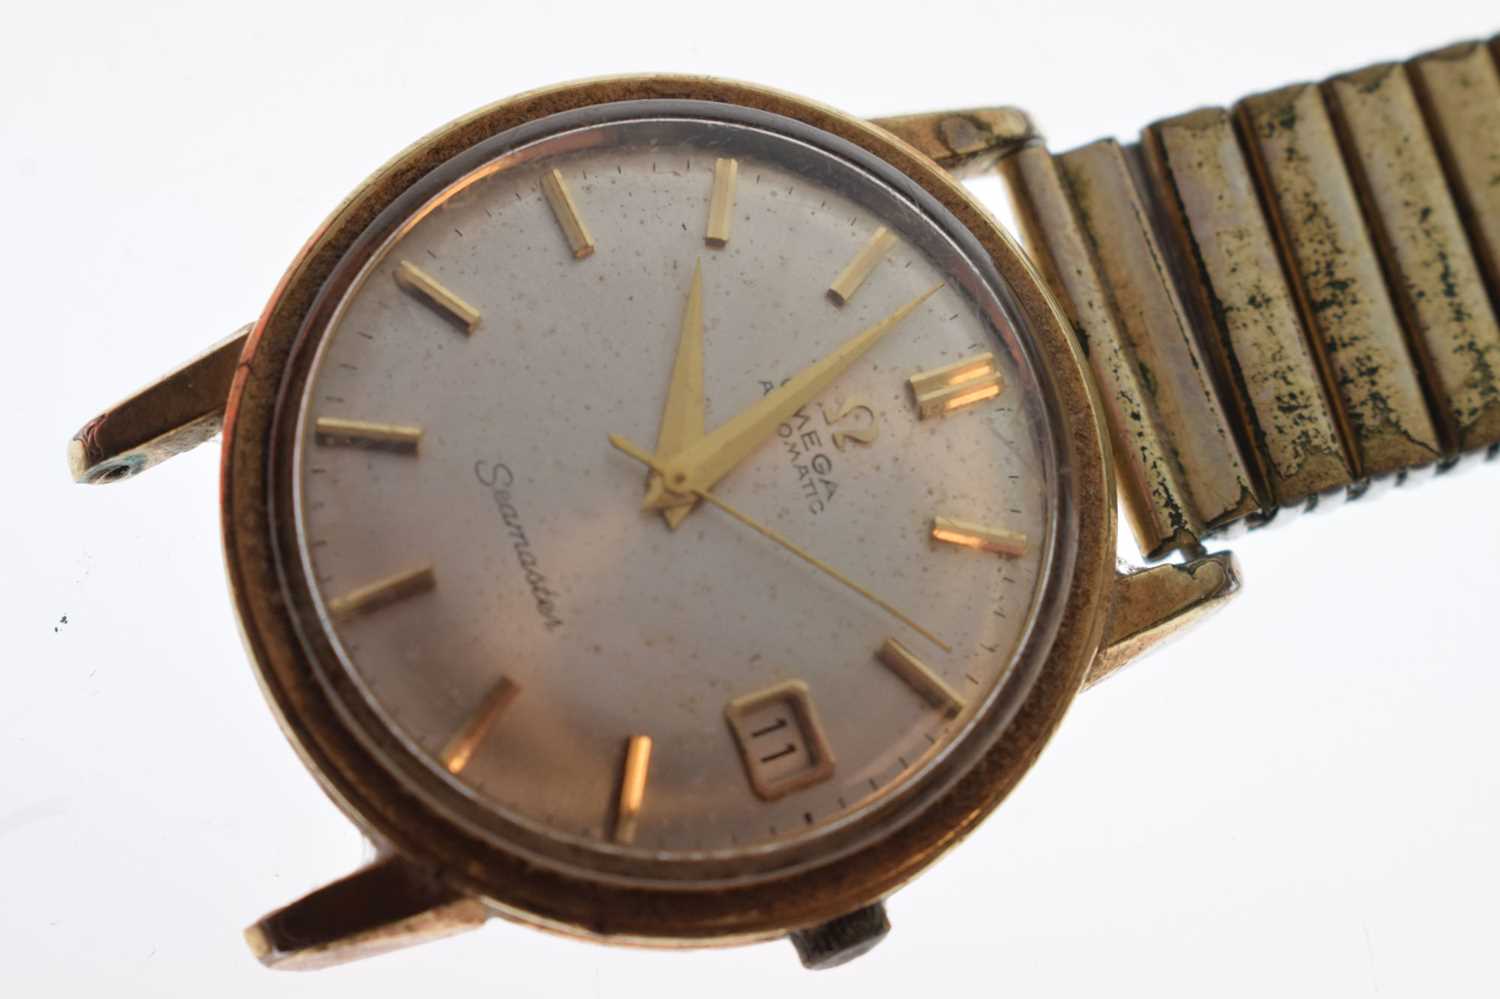 Omega - Gentleman's Seamaster gold plated bracelet watch - Image 3 of 8